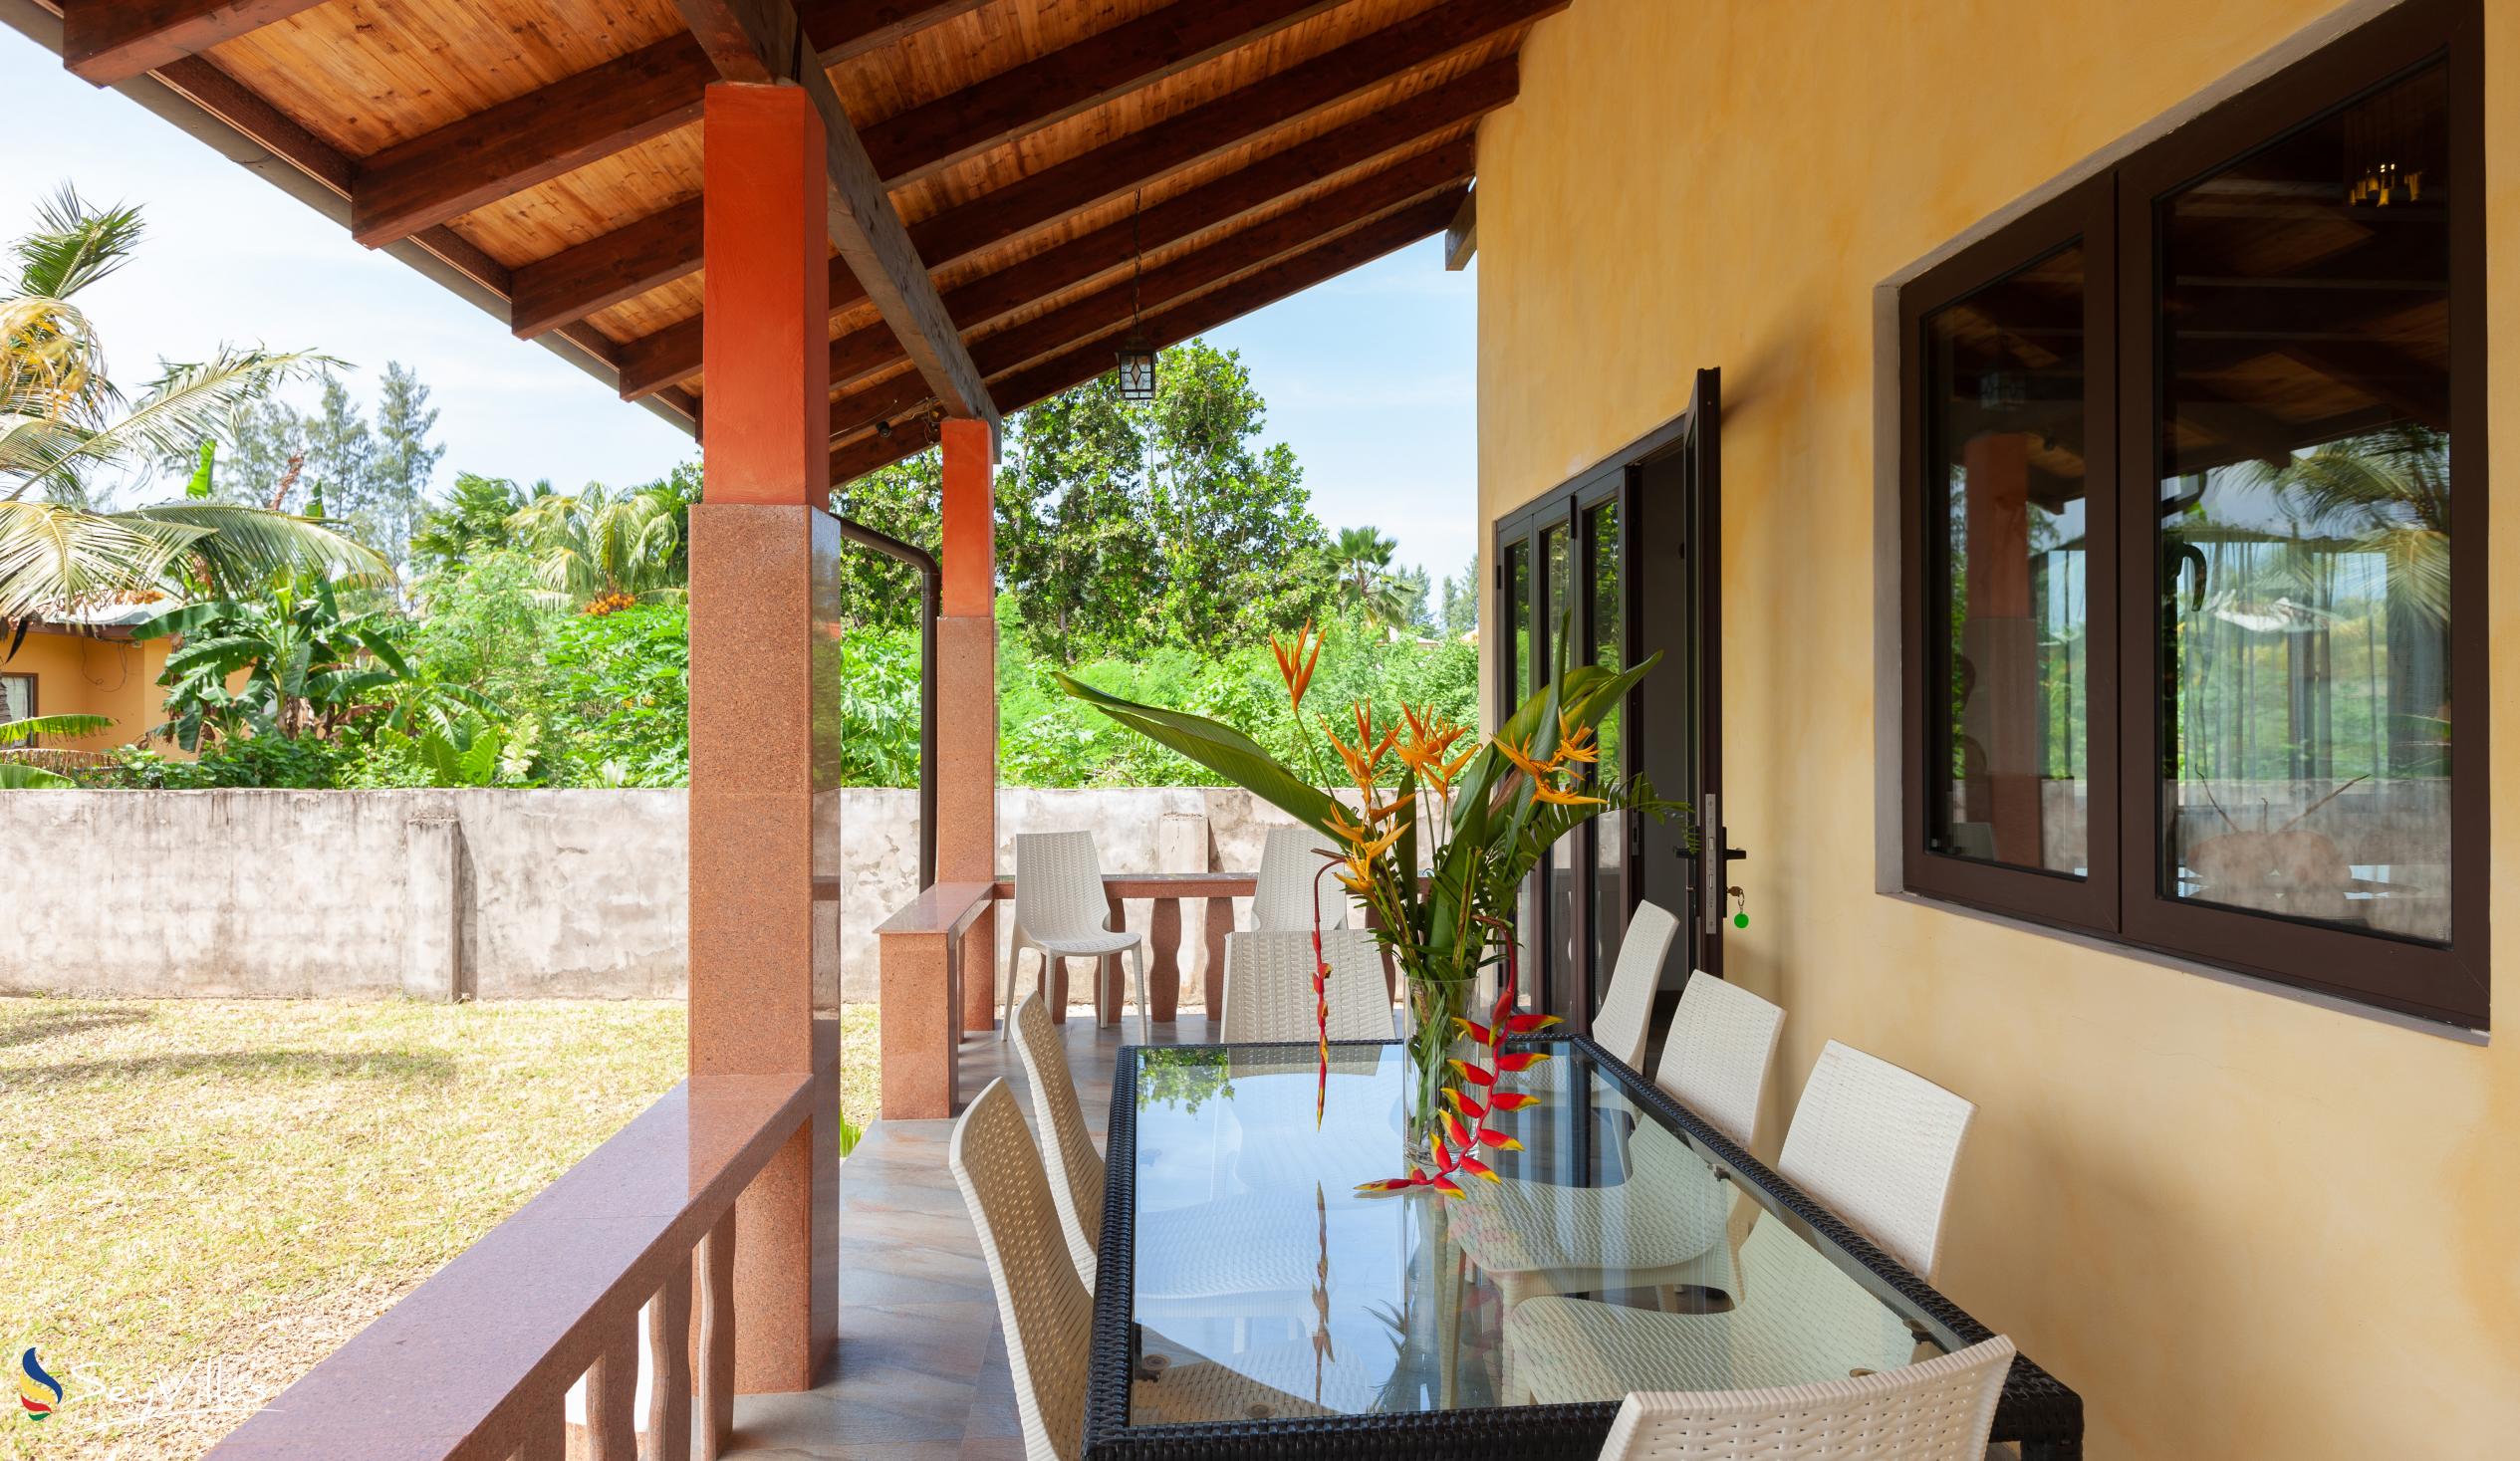 Photo 17: Villa Sole - Outdoor area - Praslin (Seychelles)